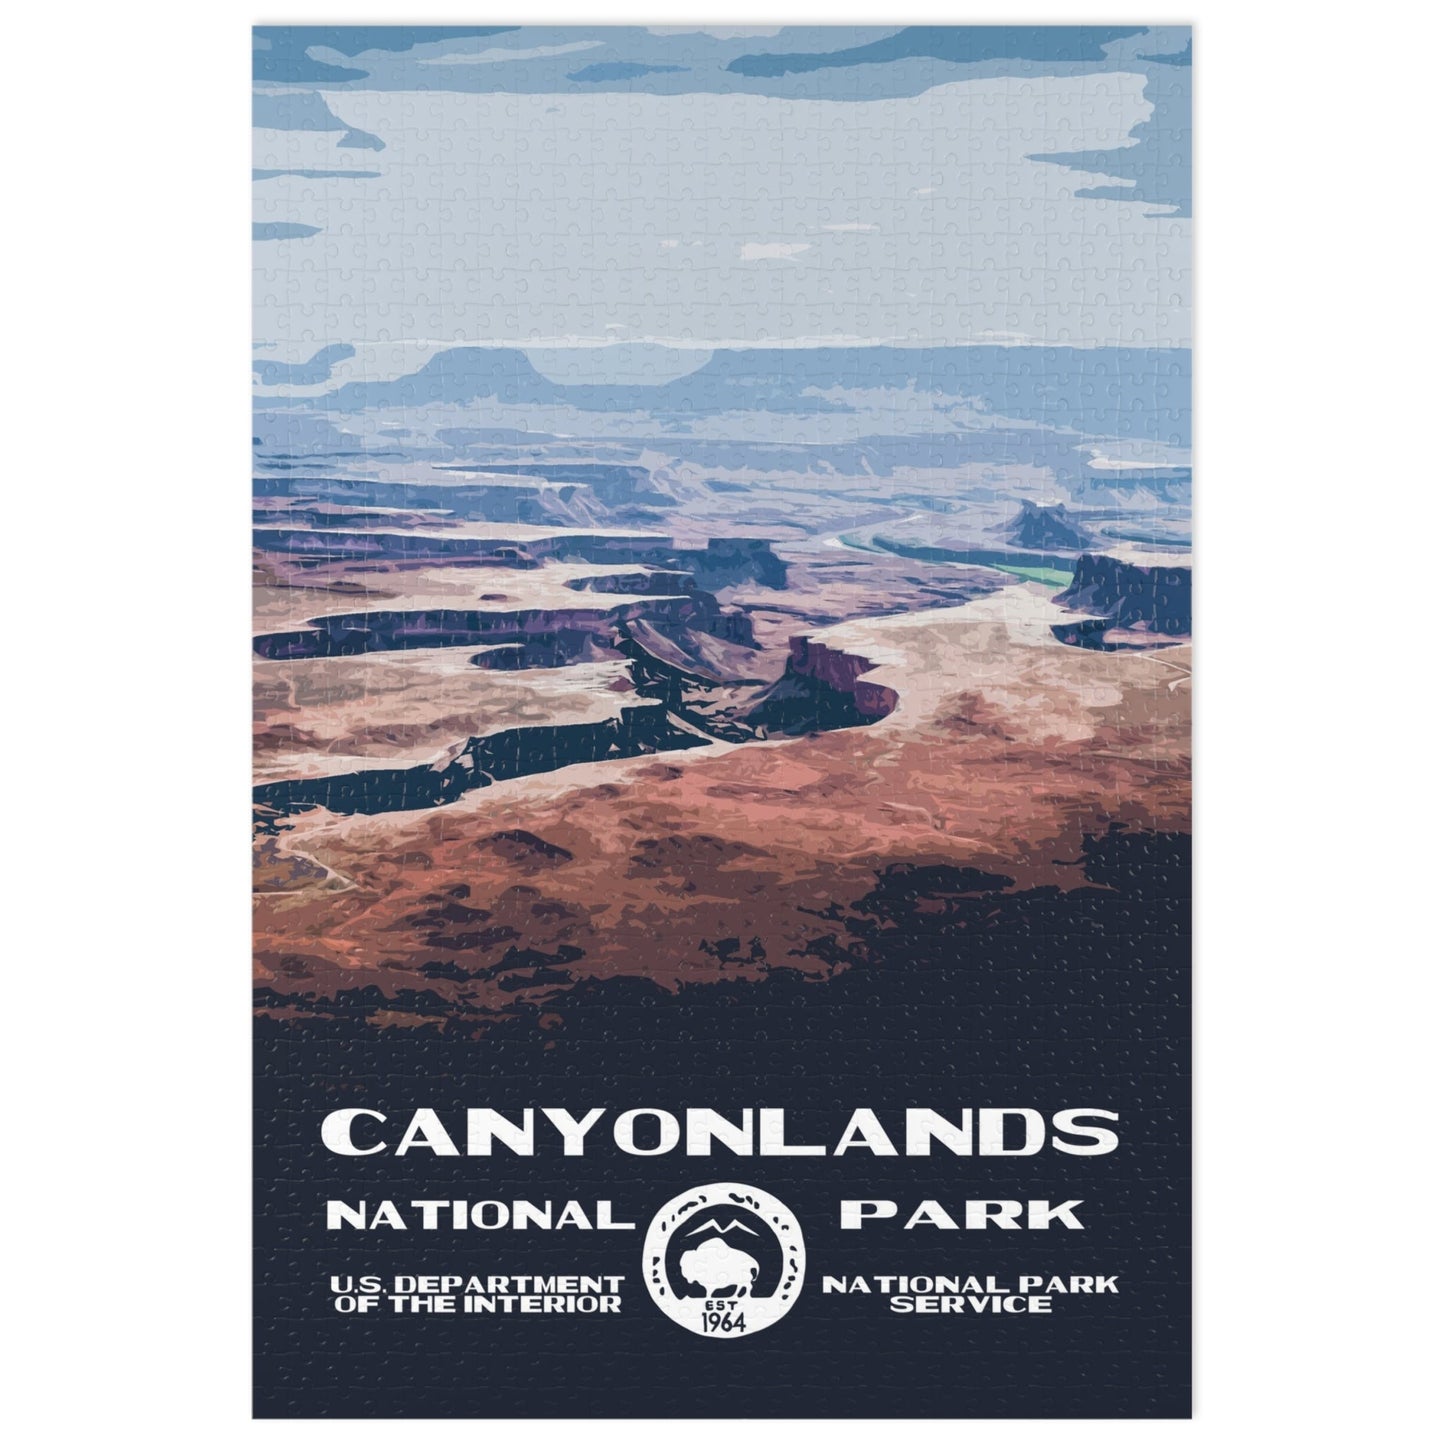 Canyonlands National Park Jigsaw Puzzle - 1000 Piece